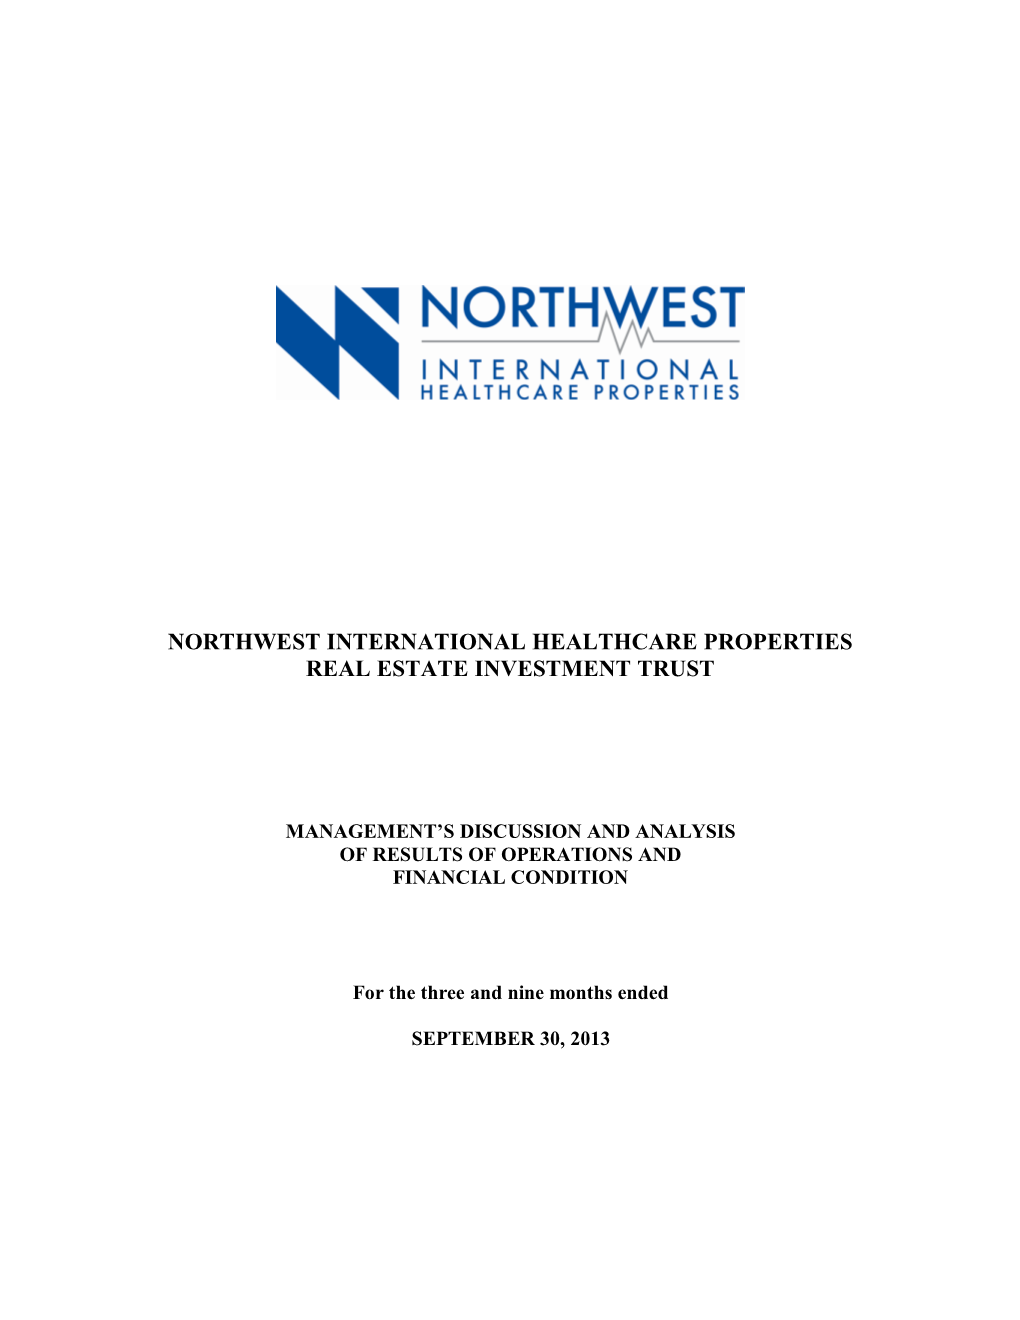 Northwest International Healthcare Properties Real Estate Investment Trust